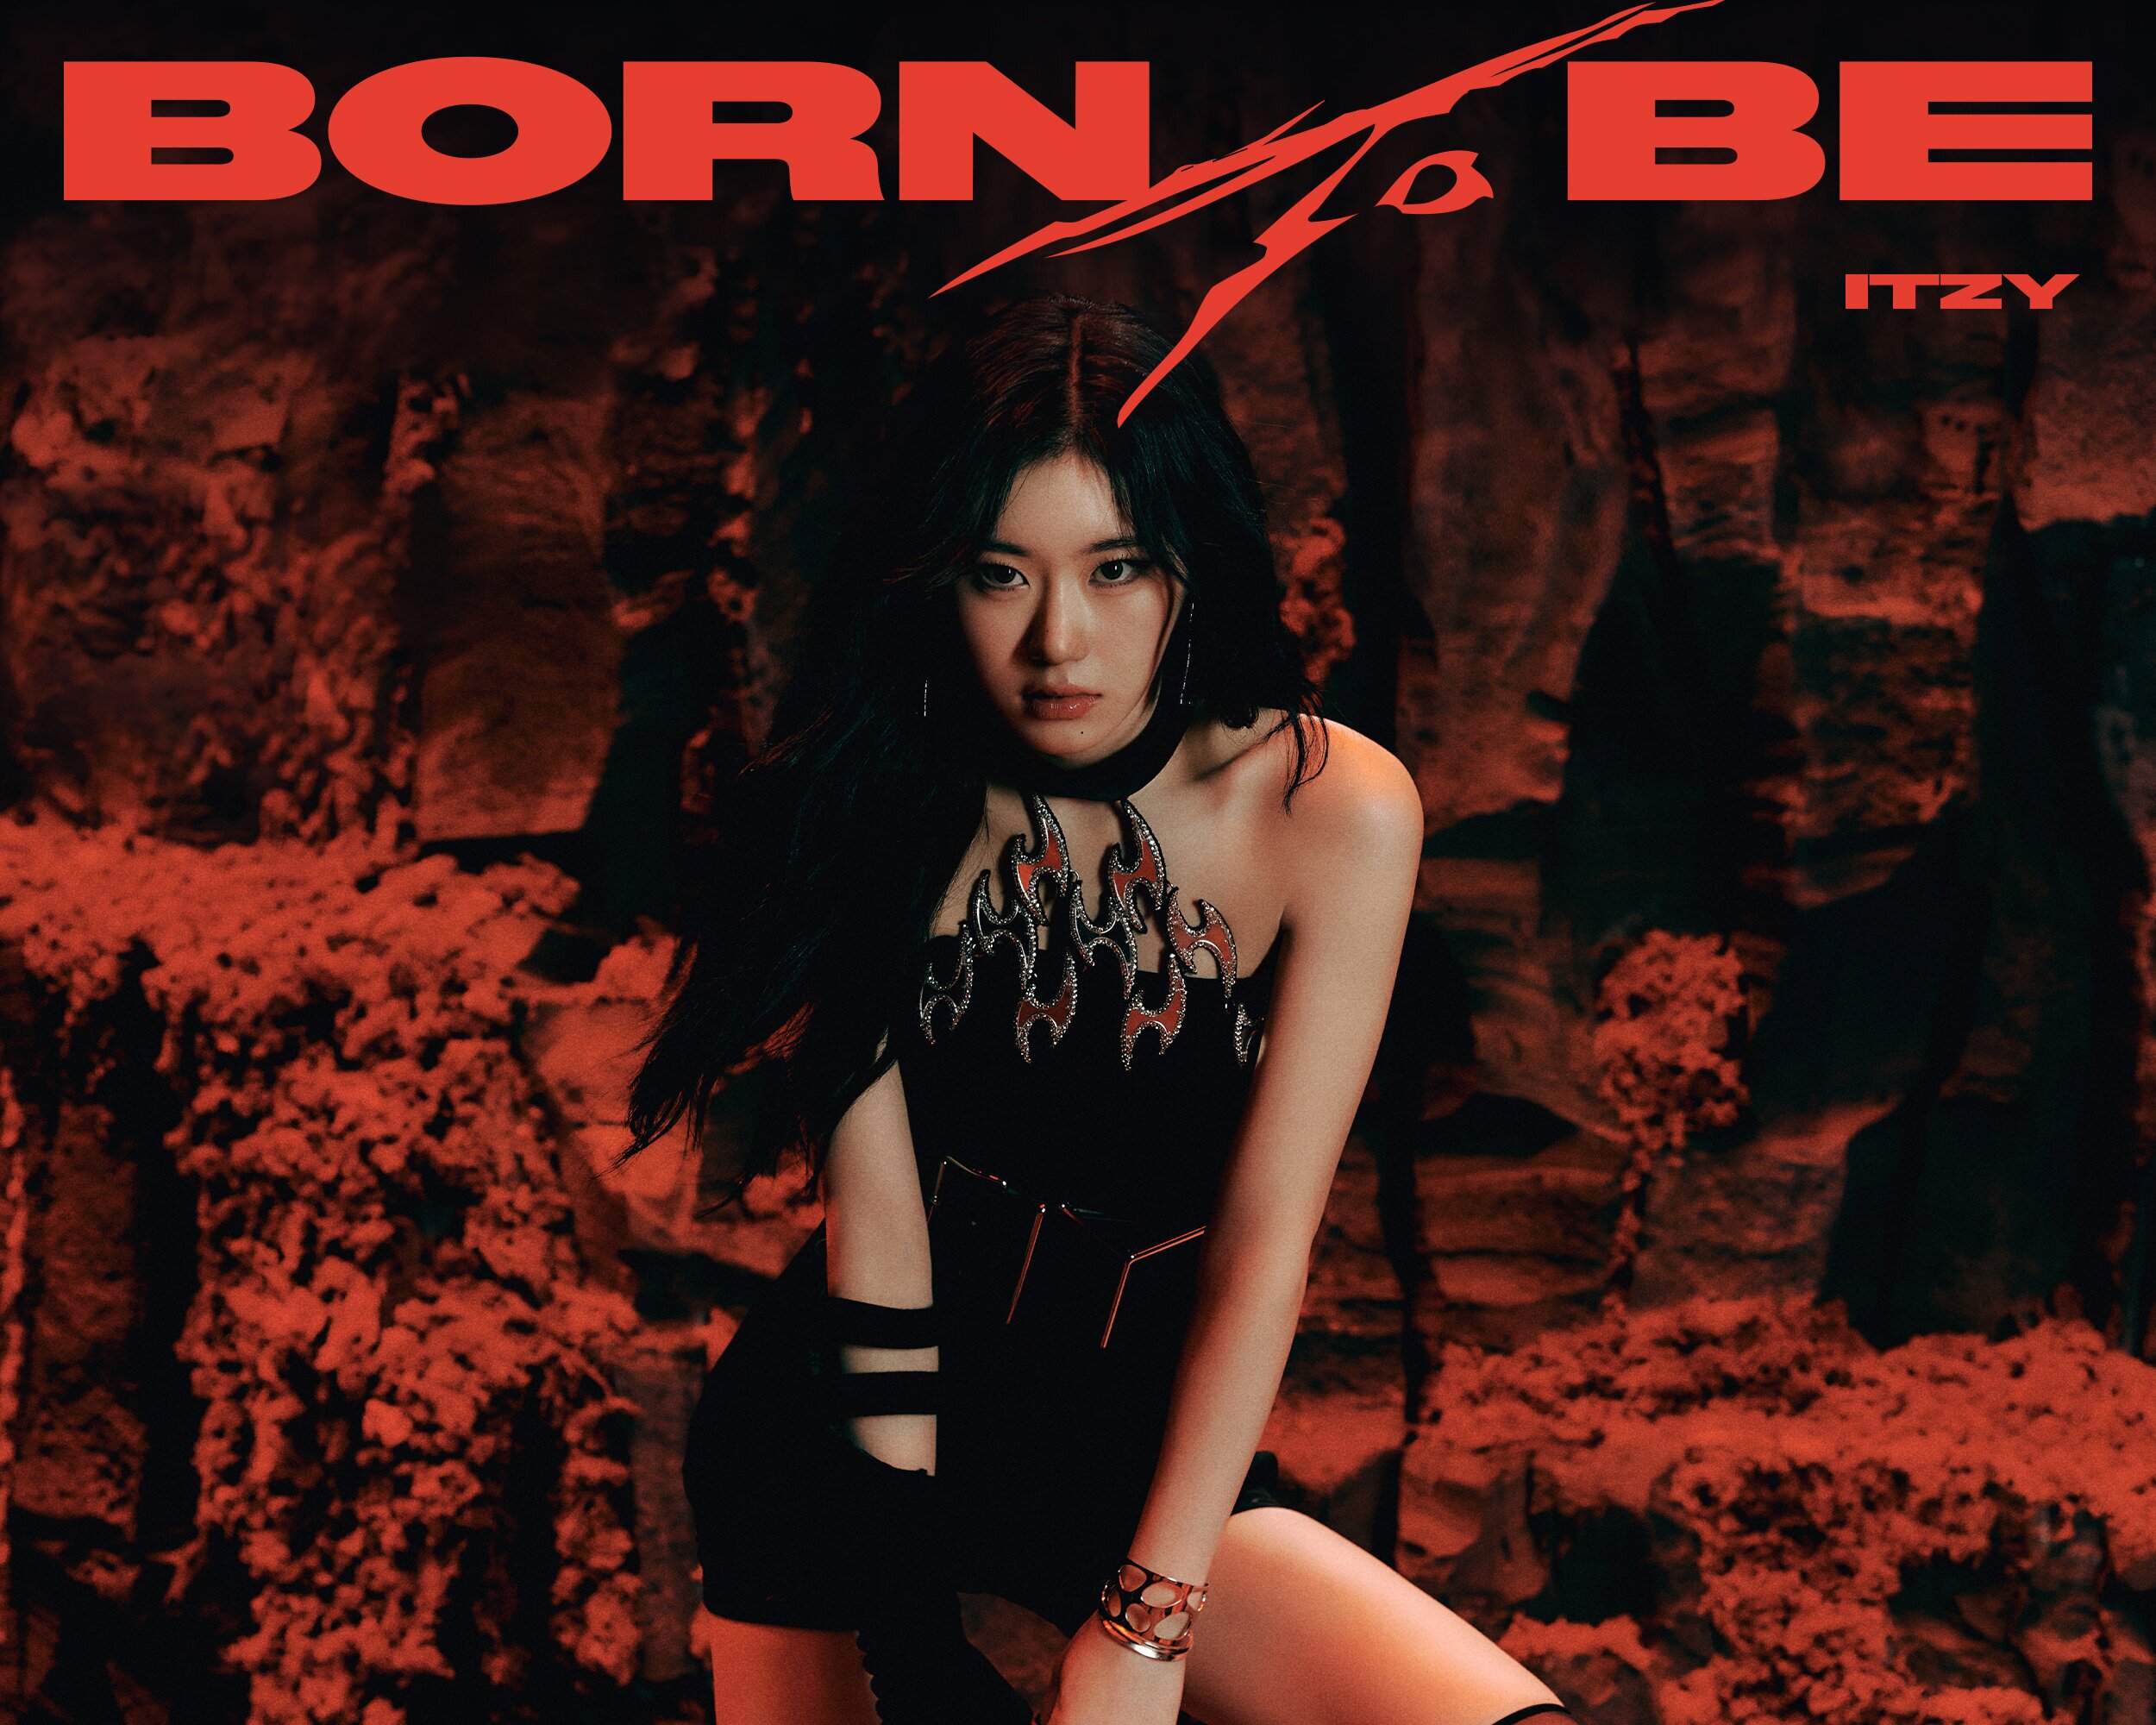 ITZY Born to Be Yeji Teaser Photos (HD/HQ) - K-Pop Database /